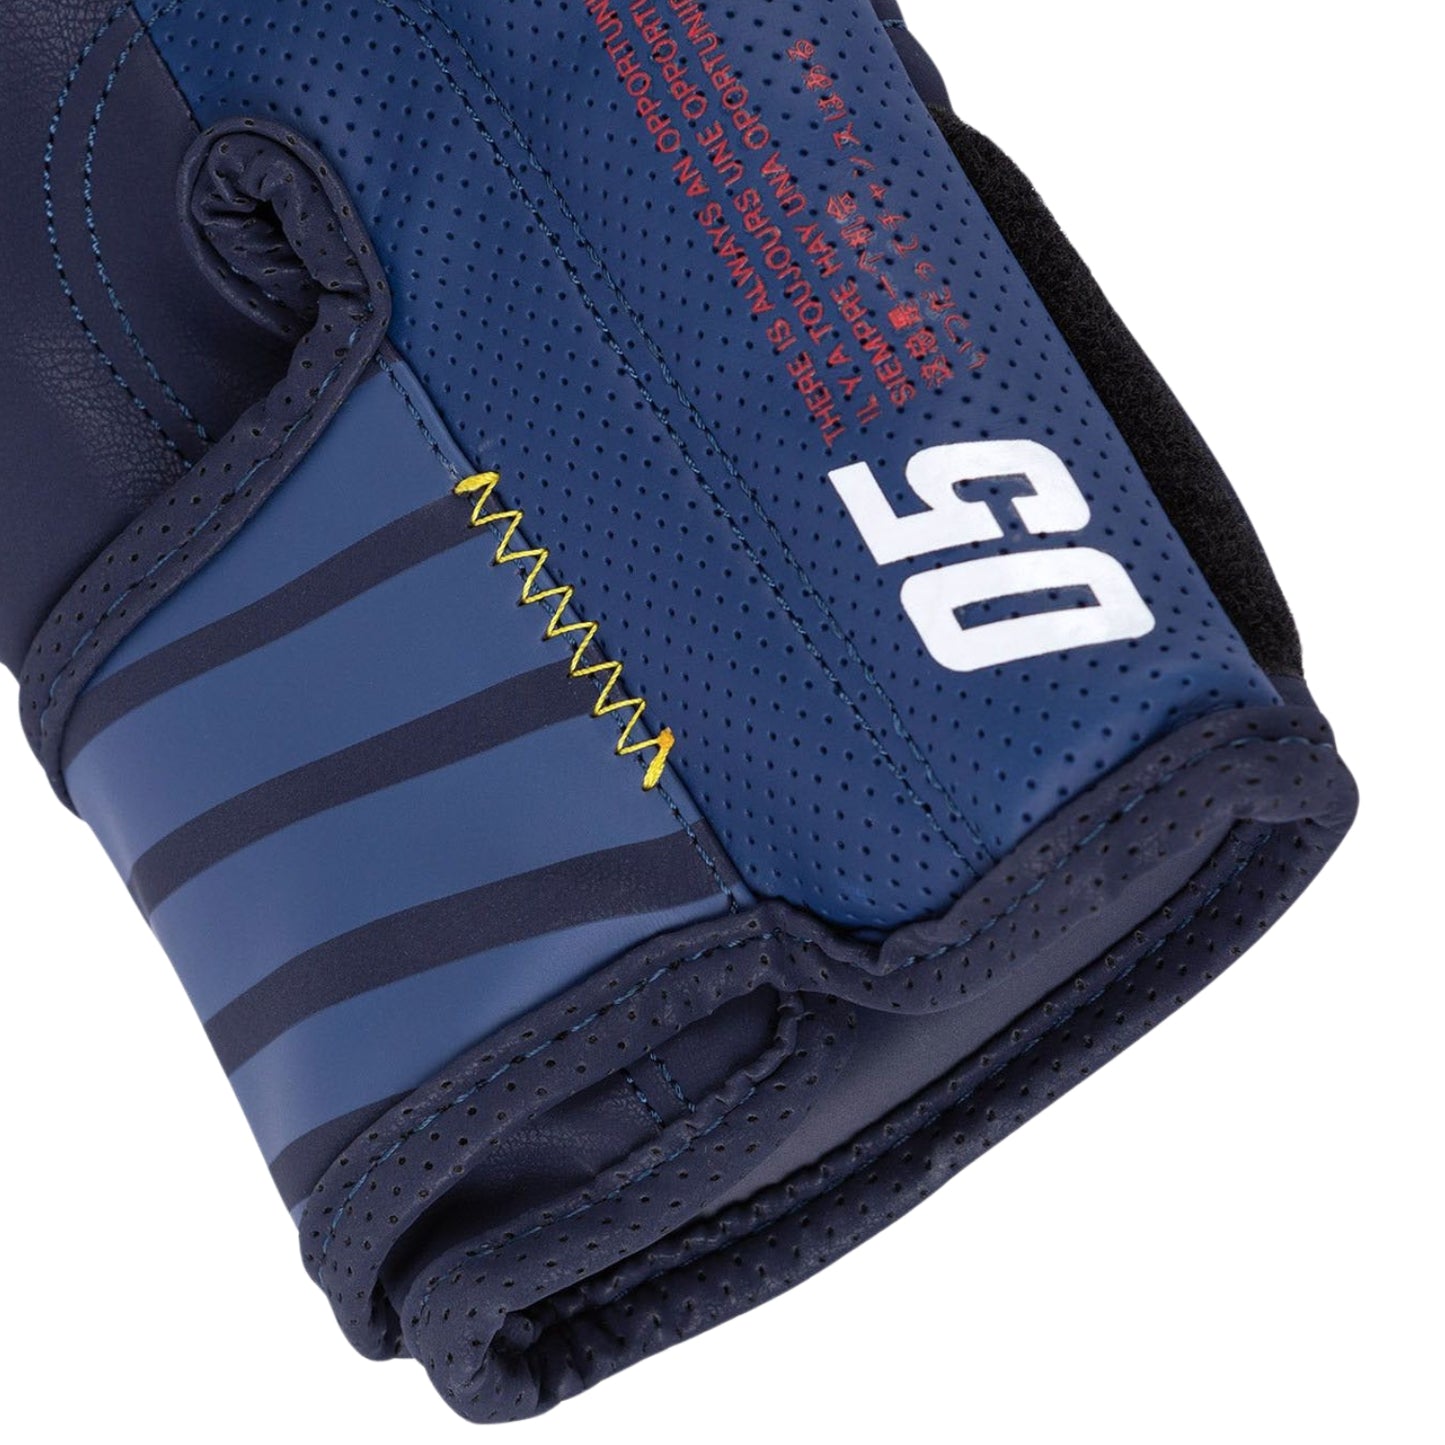 Venum Sports 88 Boxing Gloves, Blue/Yellow - Best Price online Prokicksports.com